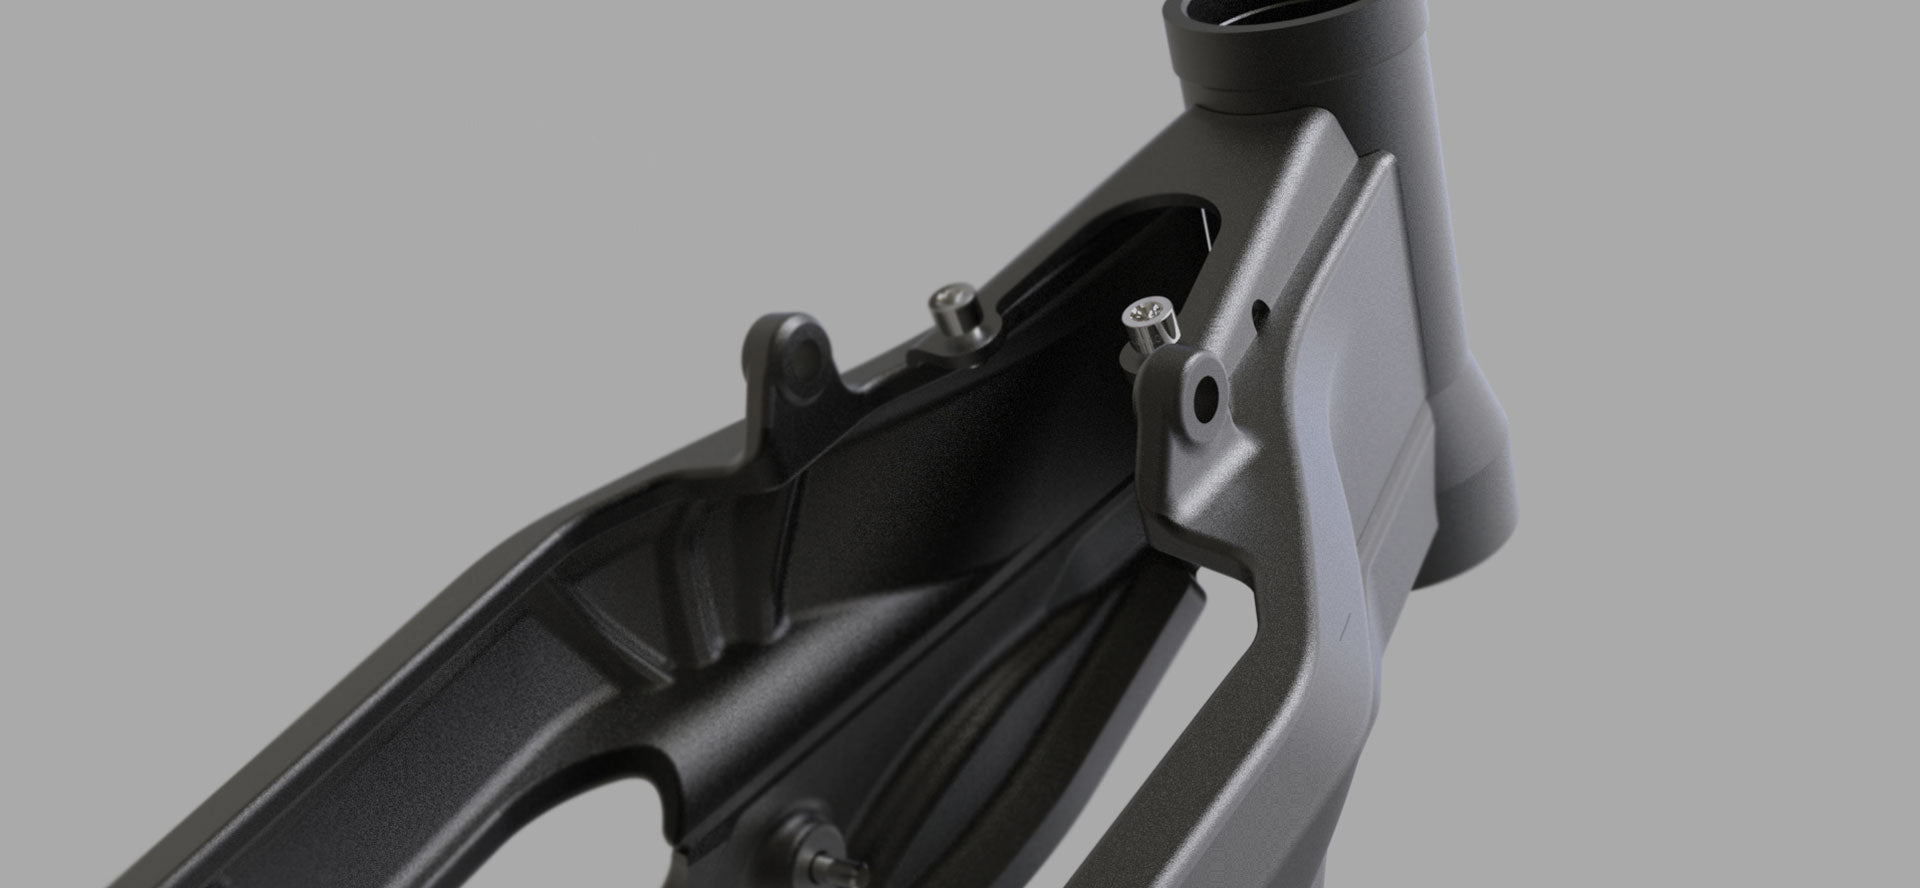 Surron LBX Dual-Sport E-Dirt Bike Chassis - Close Up on Headstock